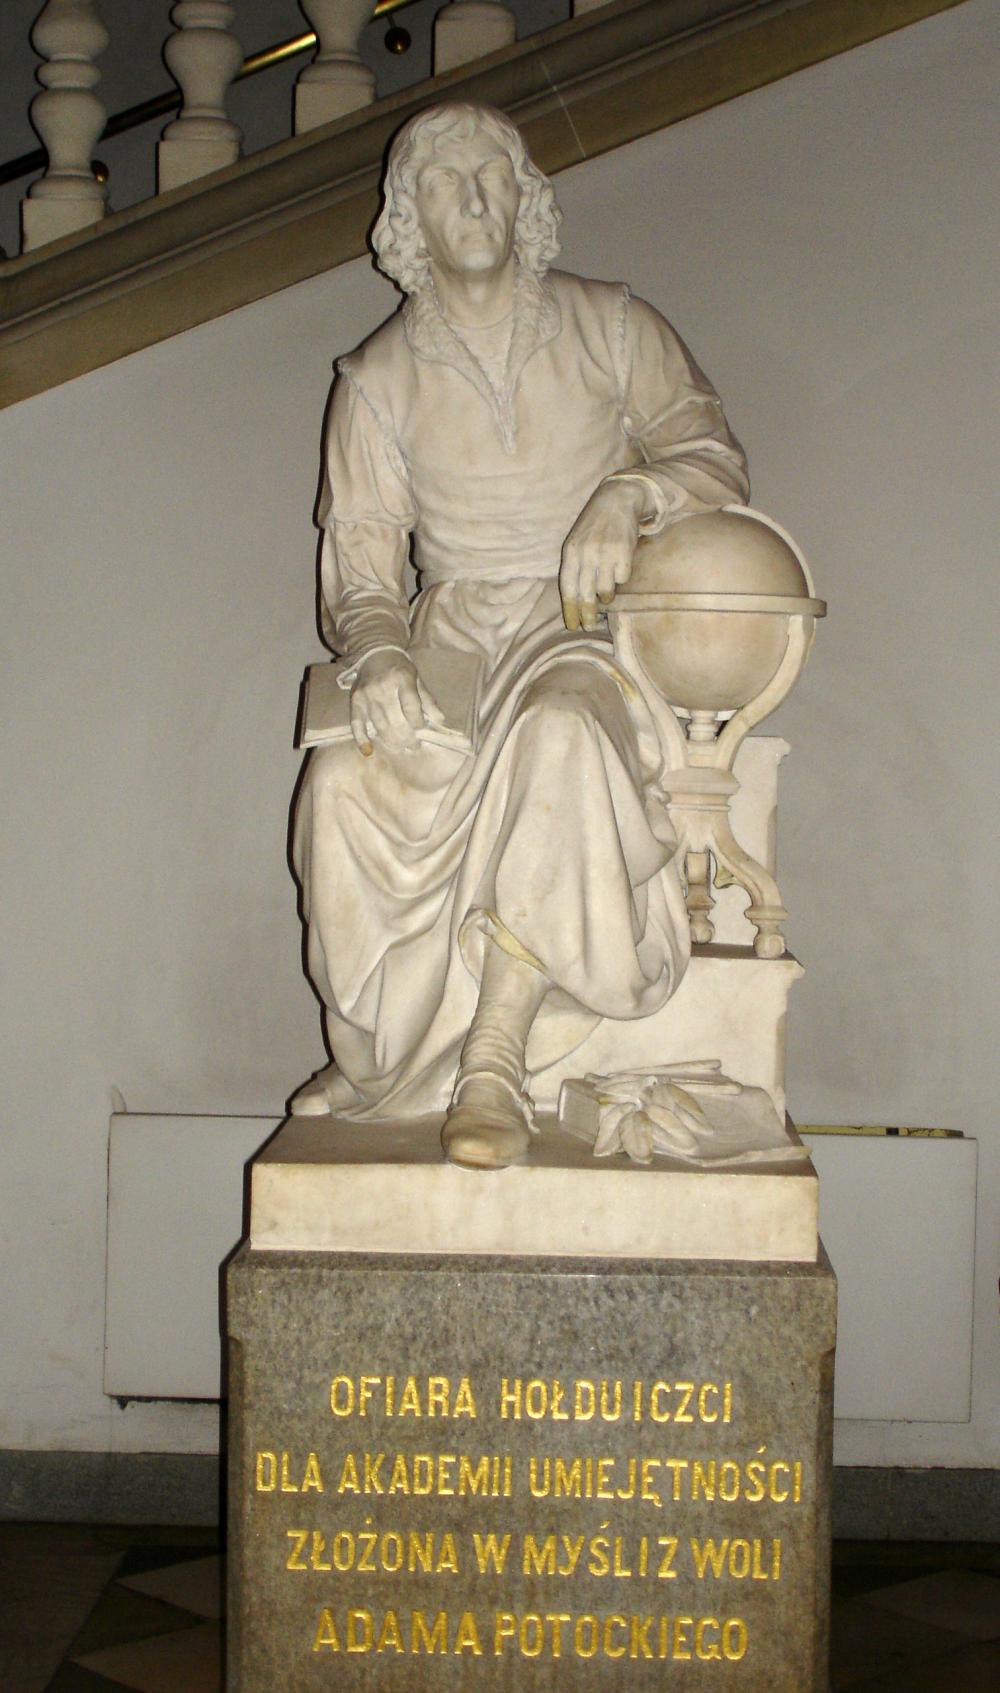 Statue of Copernicus, Walery Gadowski, (Photo: Gud